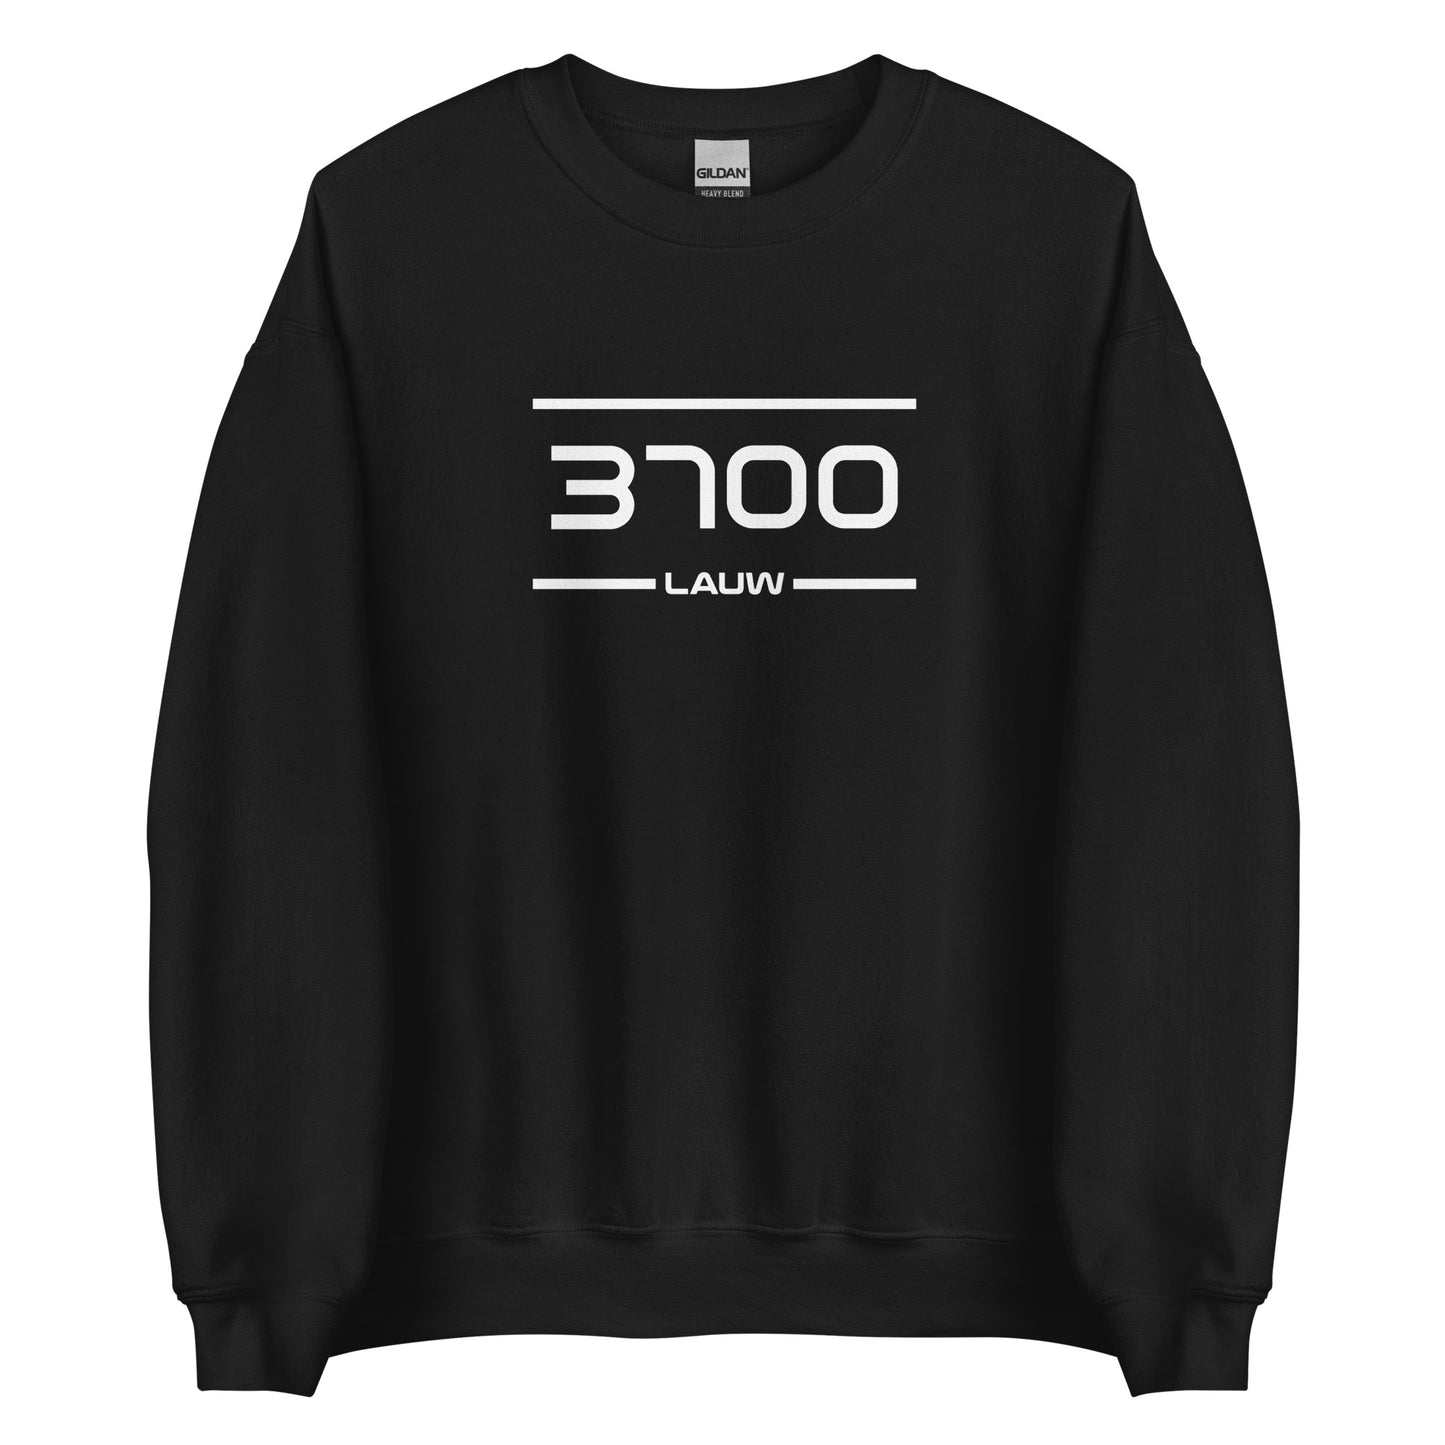 Sweater - 3700 - Lauw (M/V)